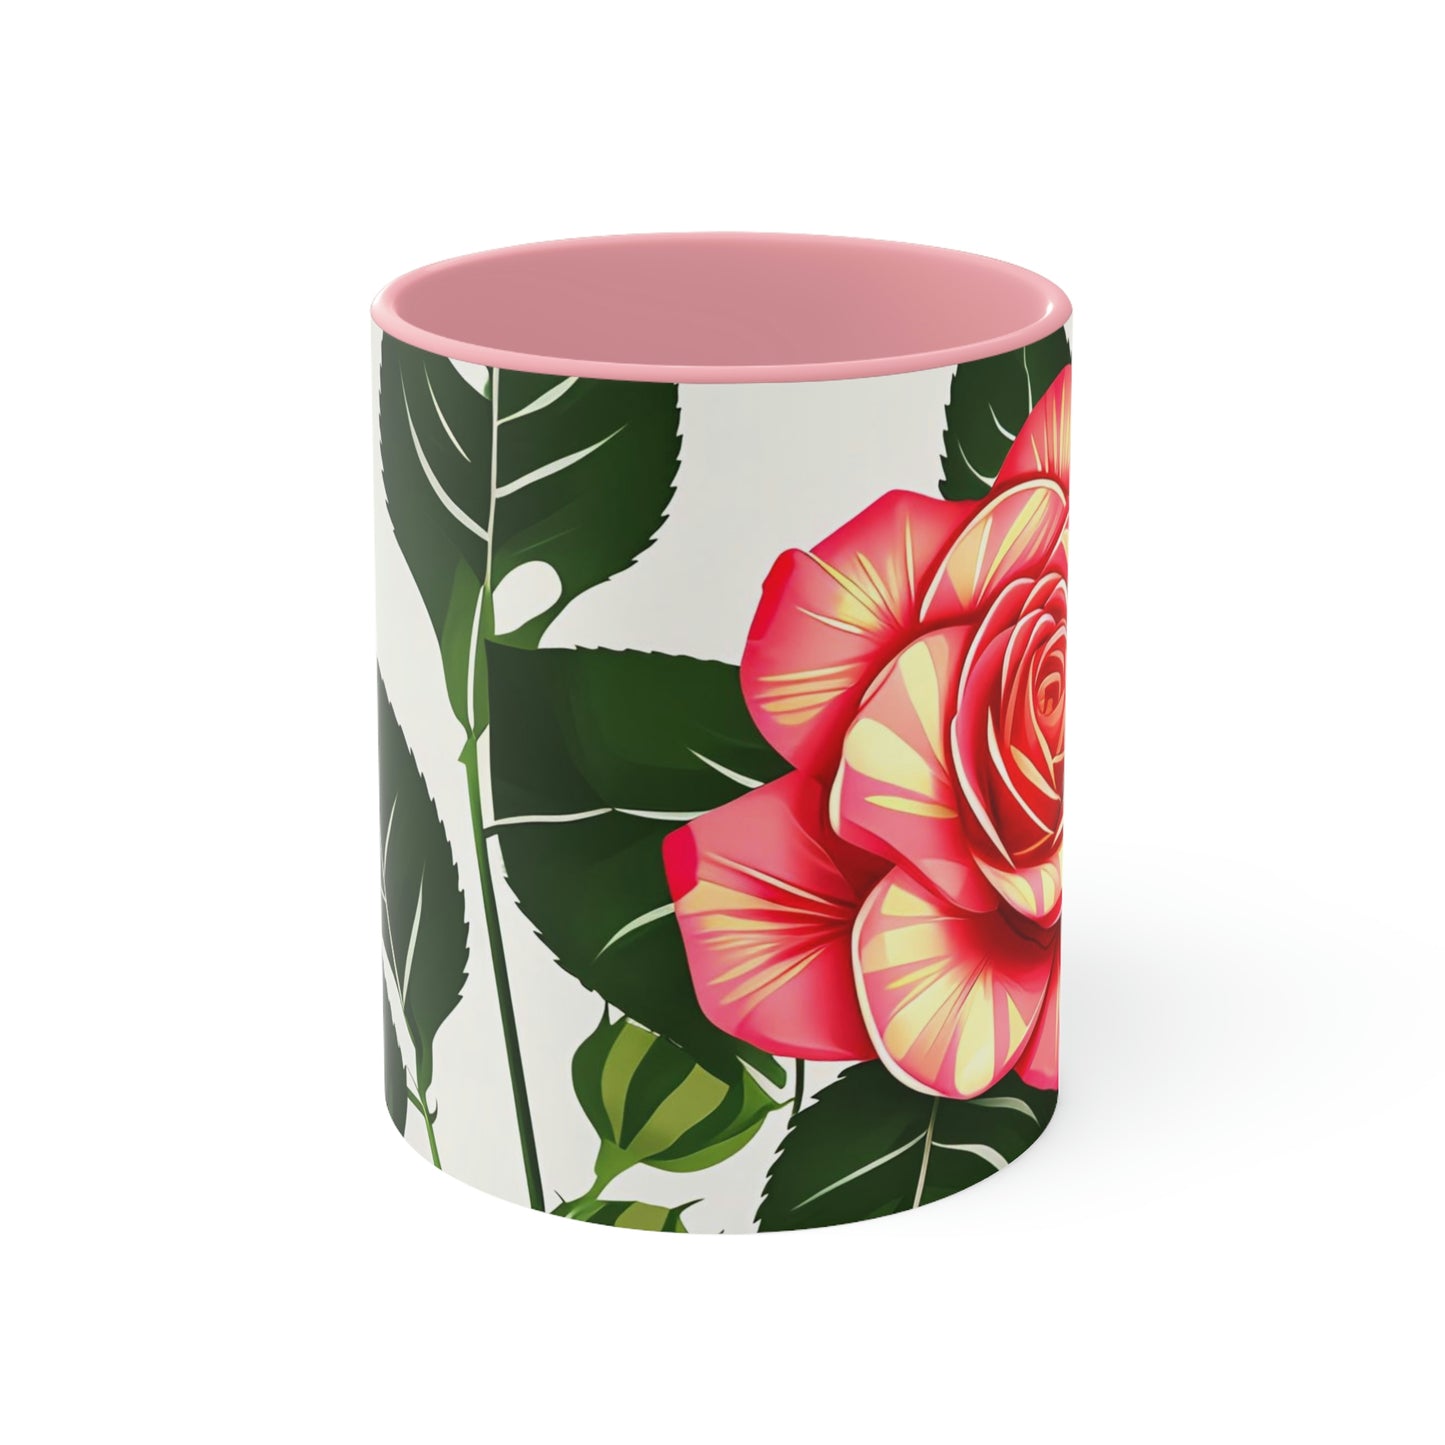 Rose Flower, Ceramic Mug - Perfect for Coffee, Tea, and More!